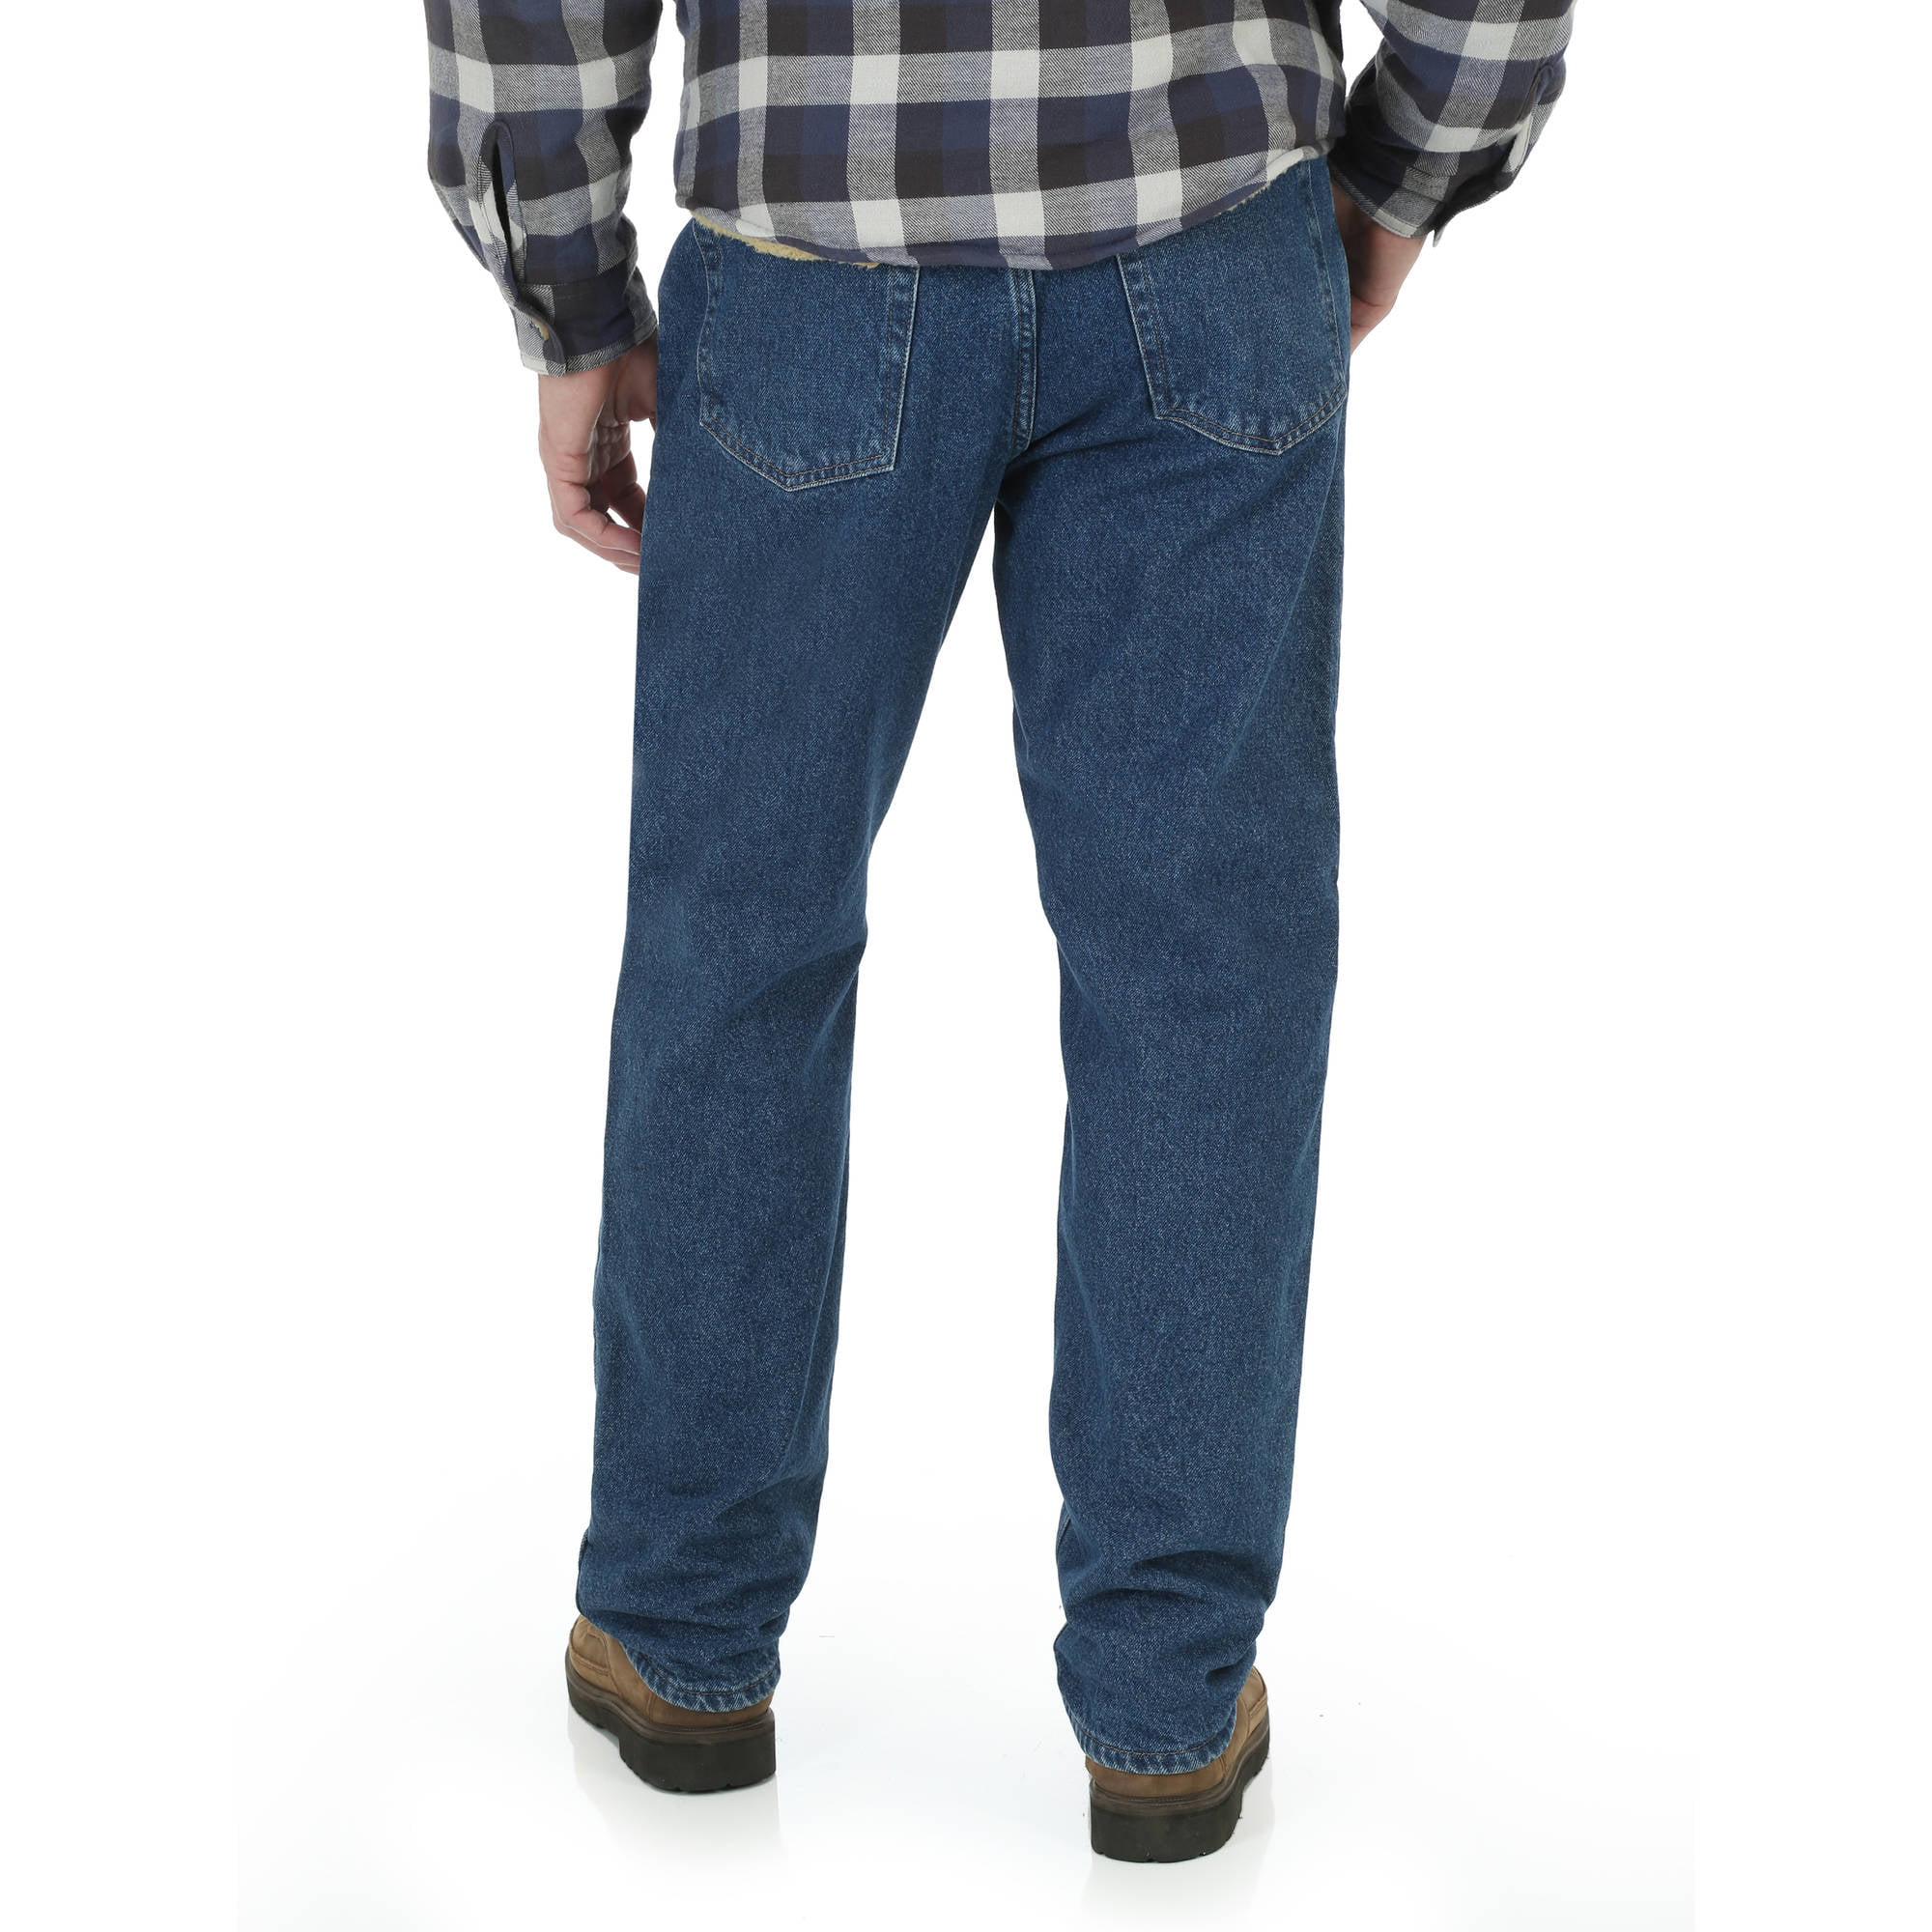 mens lined jeans walmart